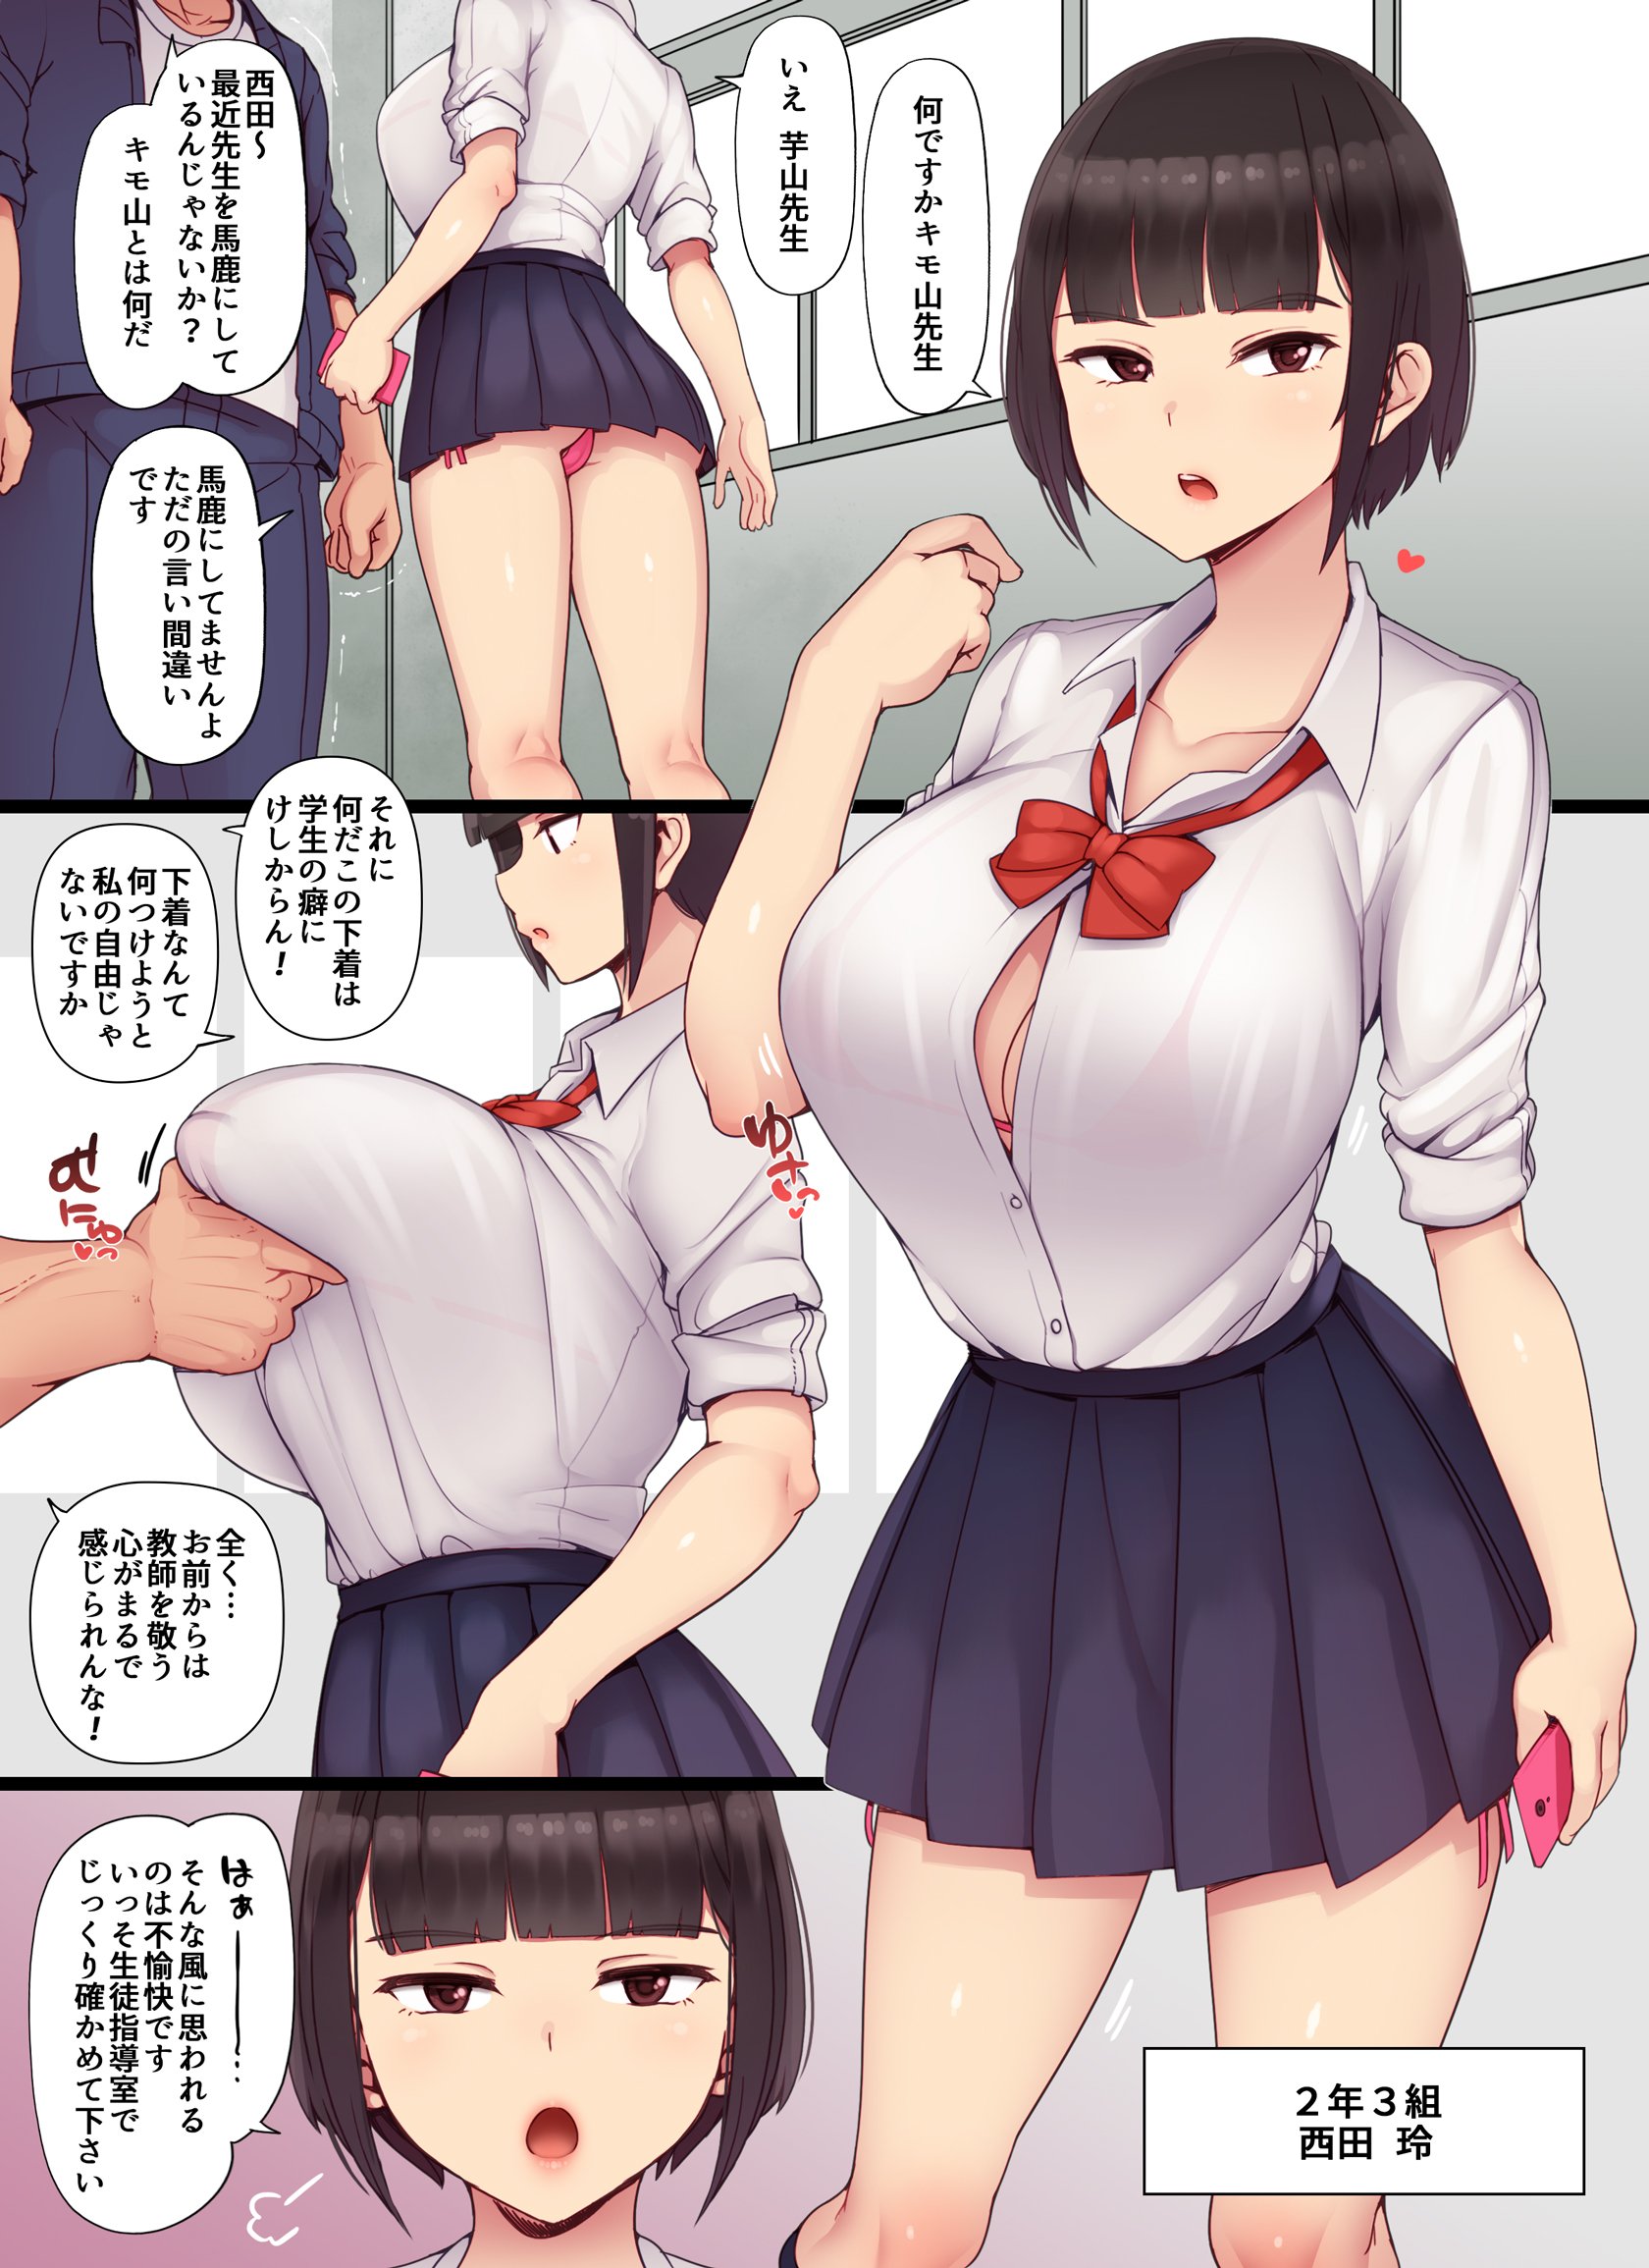 Nishida is mocking the teacher [ENG/JPN] comic porn | HD Porn Comics